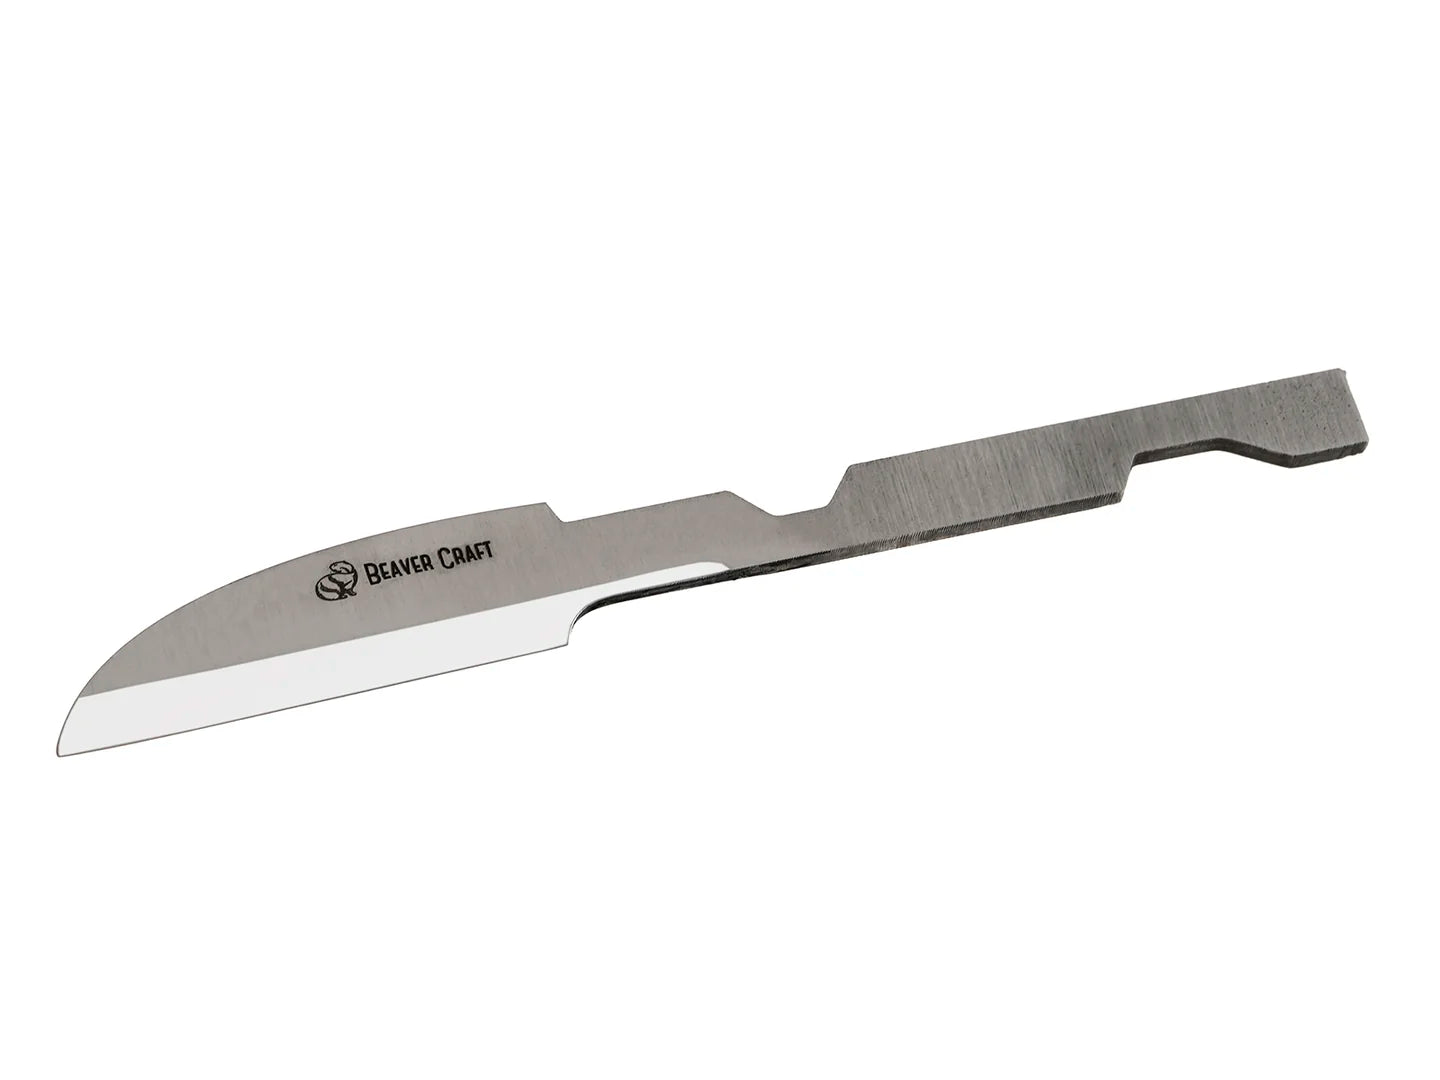 Bench knife blade